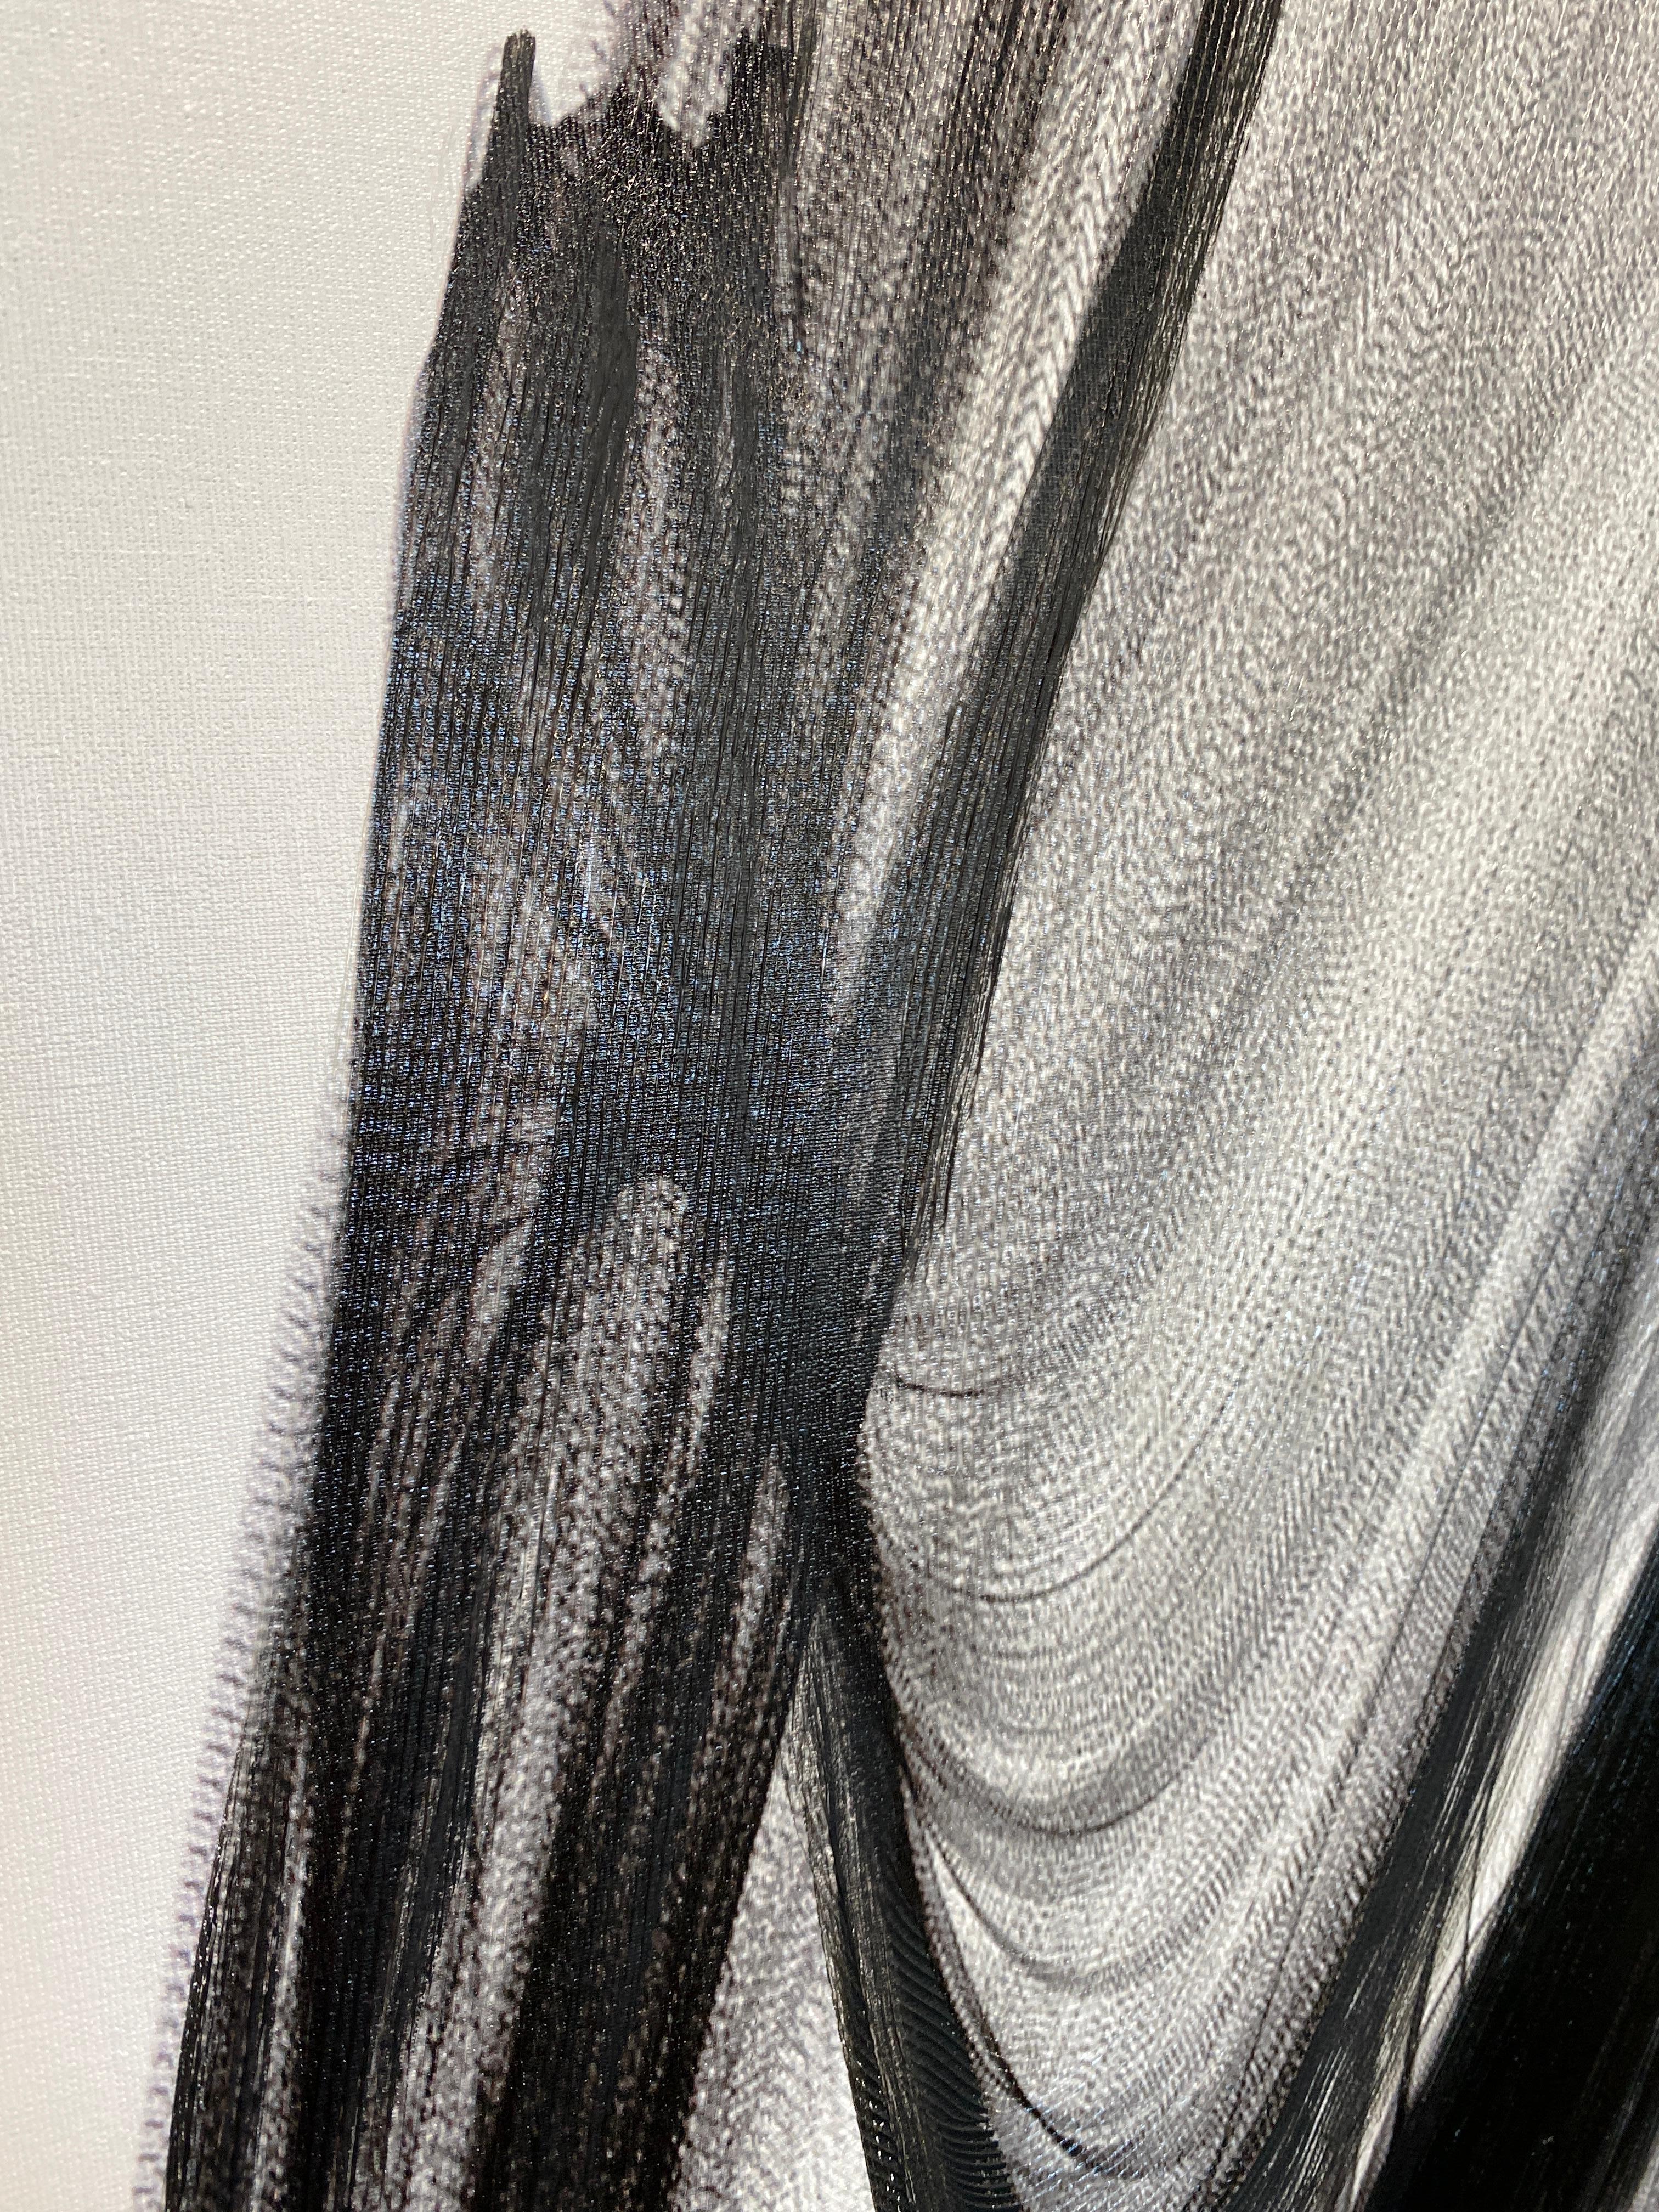 Black White Minimalist New Media Painting on Canvas 60x45